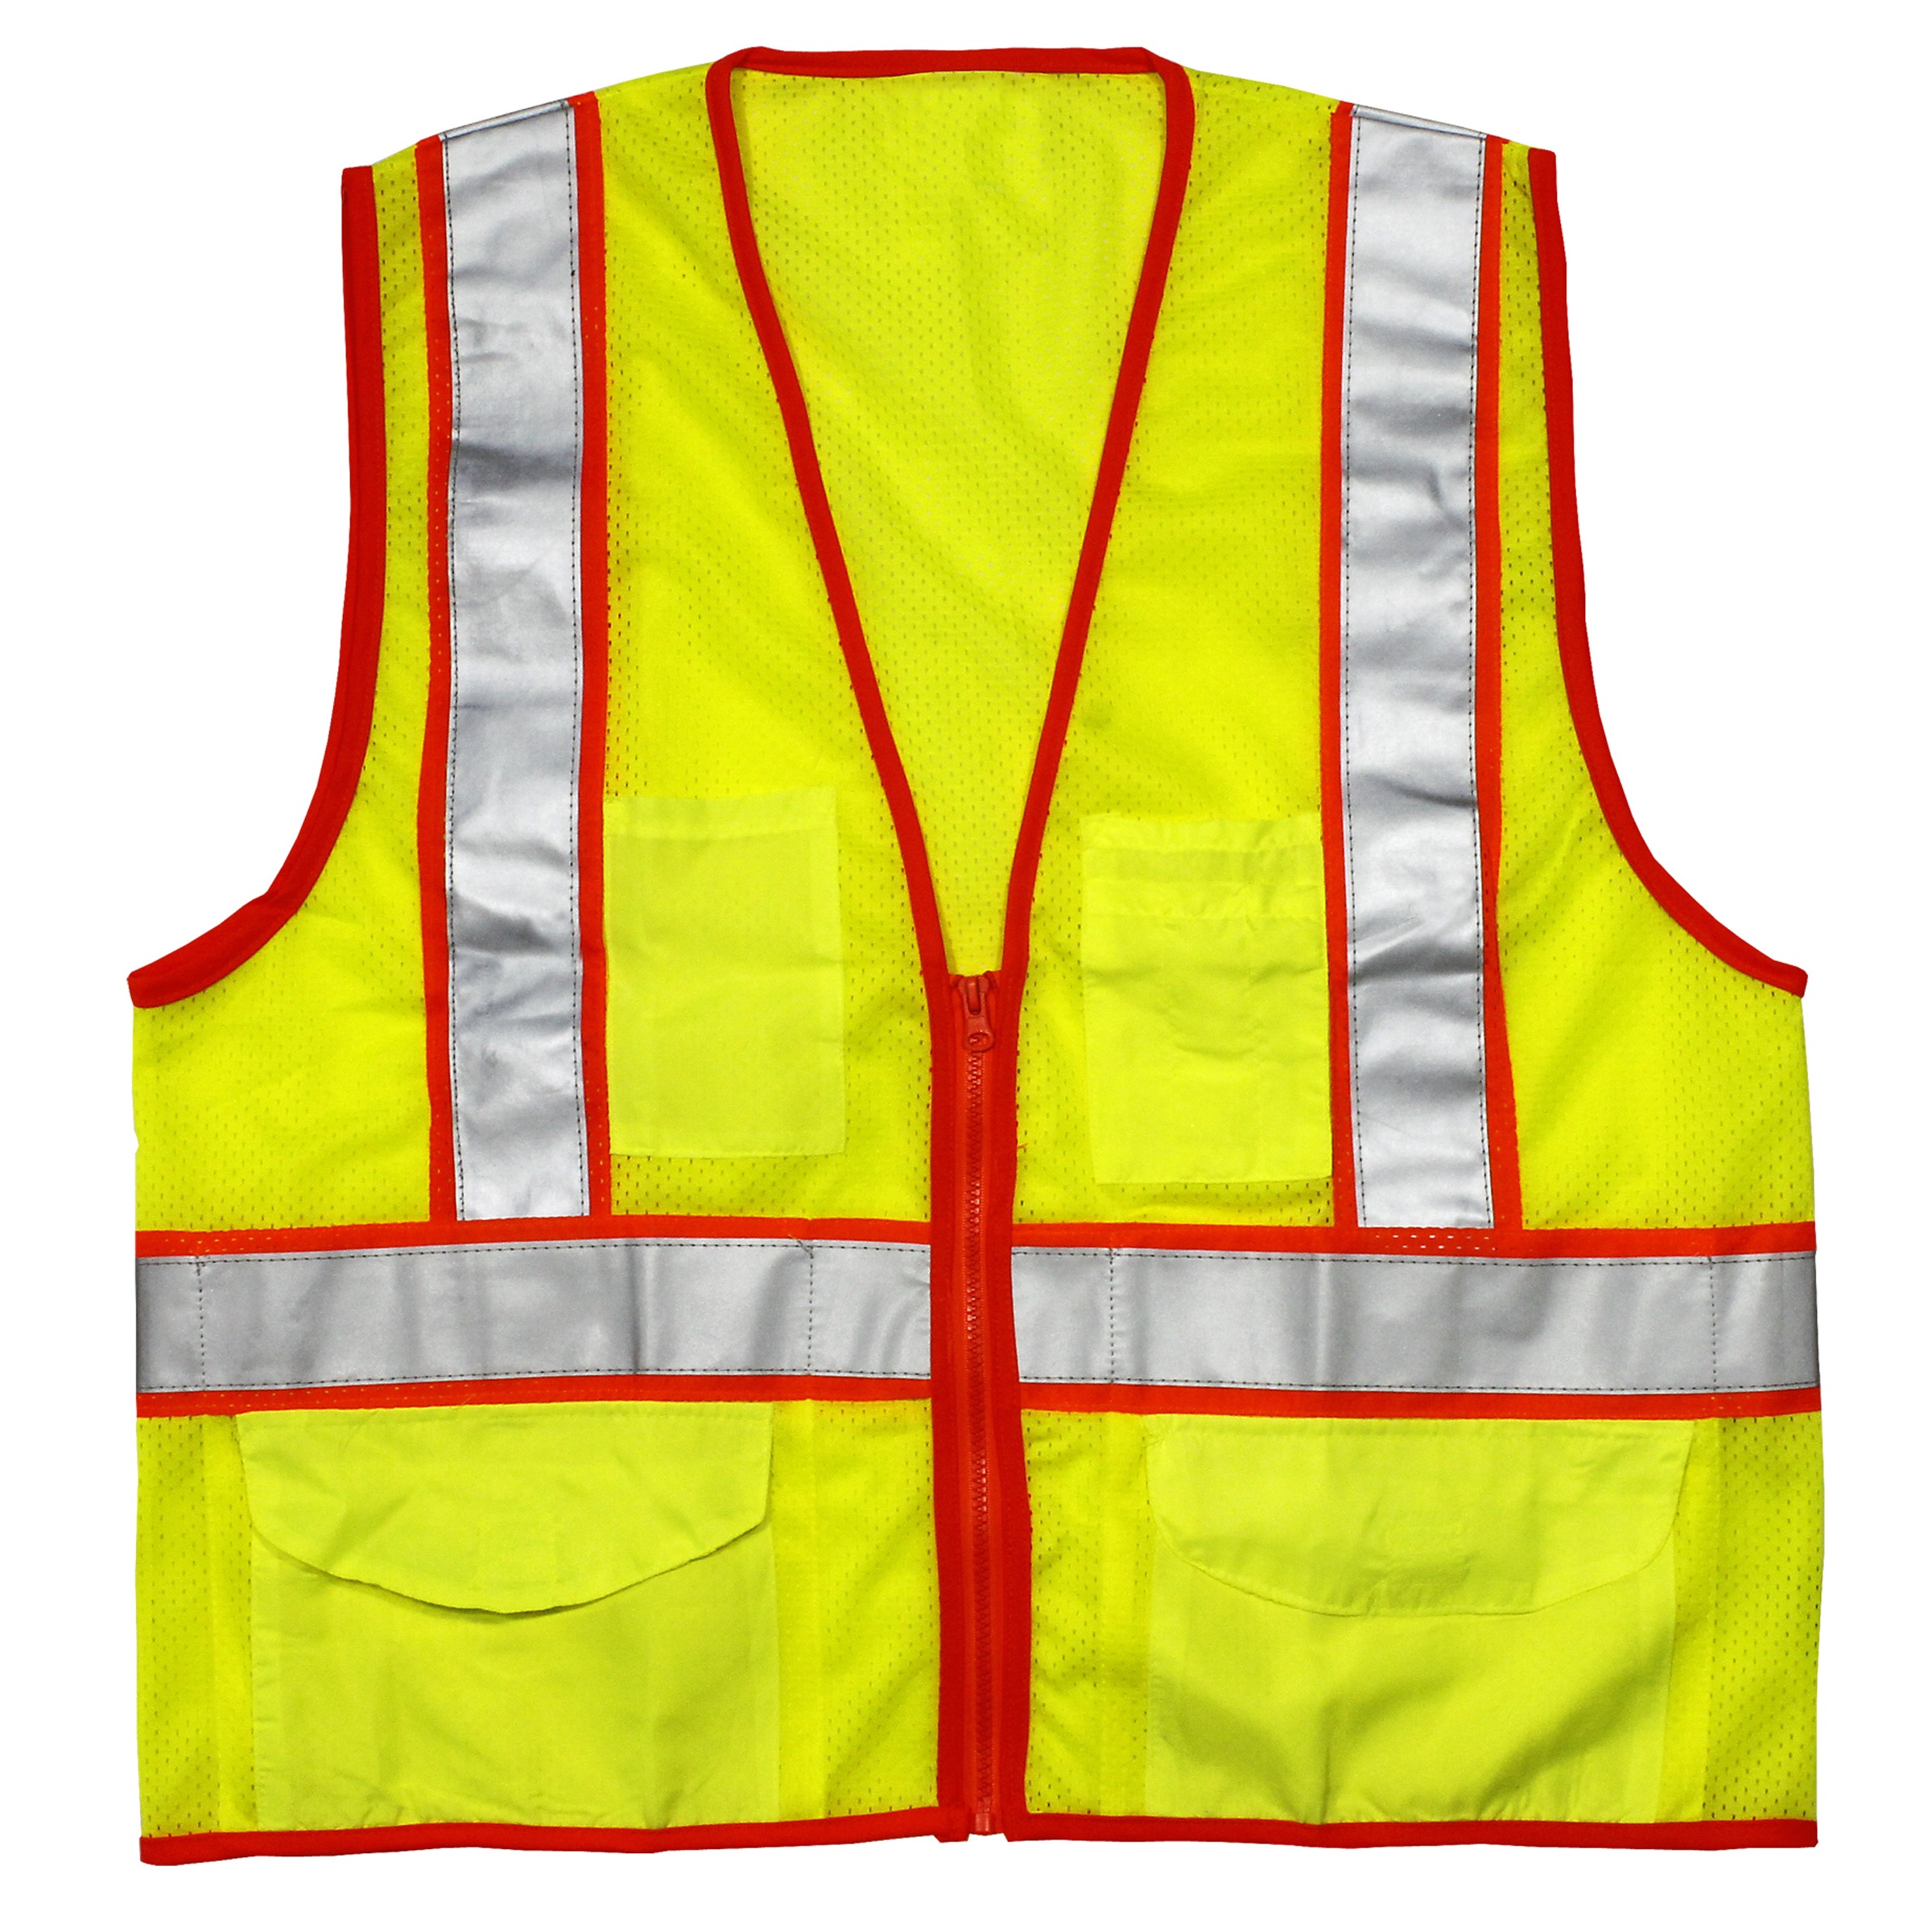 Illuminator&trade; Class 2, Mesh Surveyors Vest